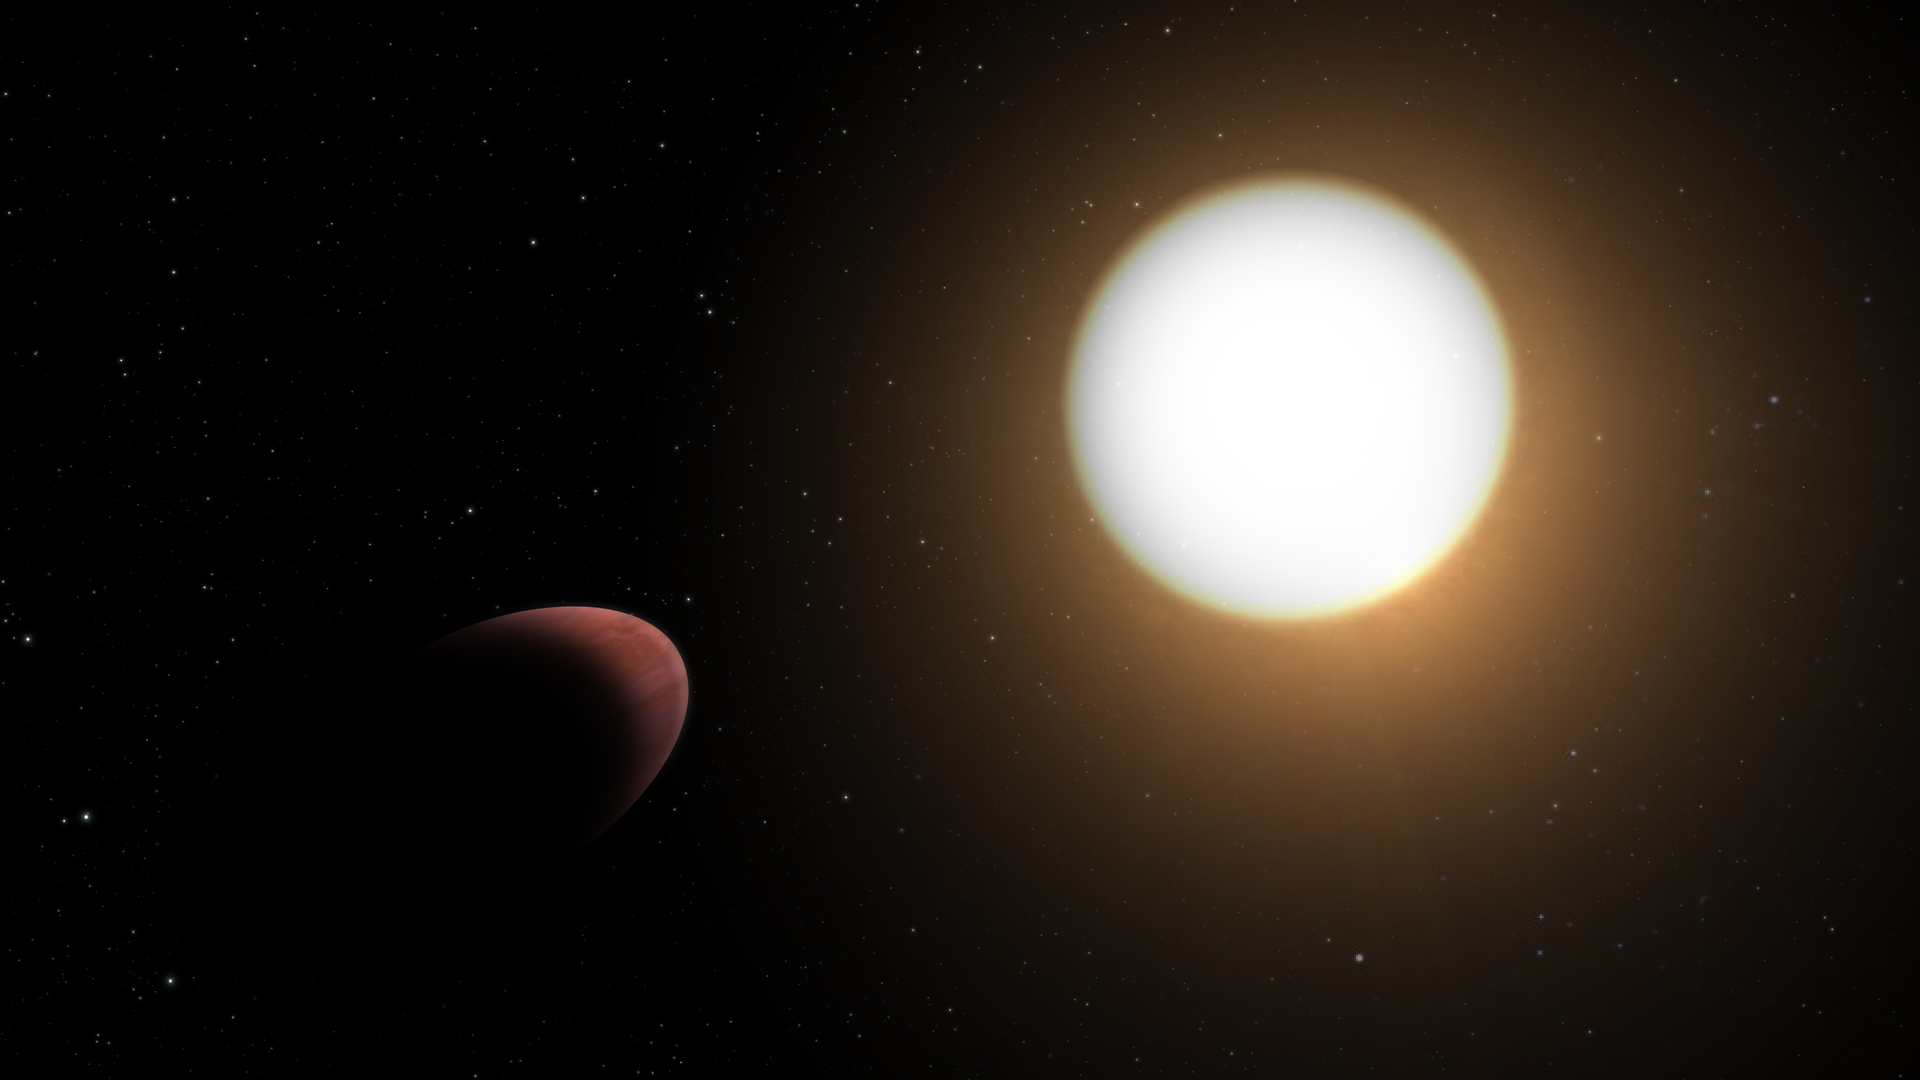 Планета WASP-103b в представлении художника. Фото: ЕКА — "Хеопс" показал экзопланету в форме мяча для регби (esa.int)